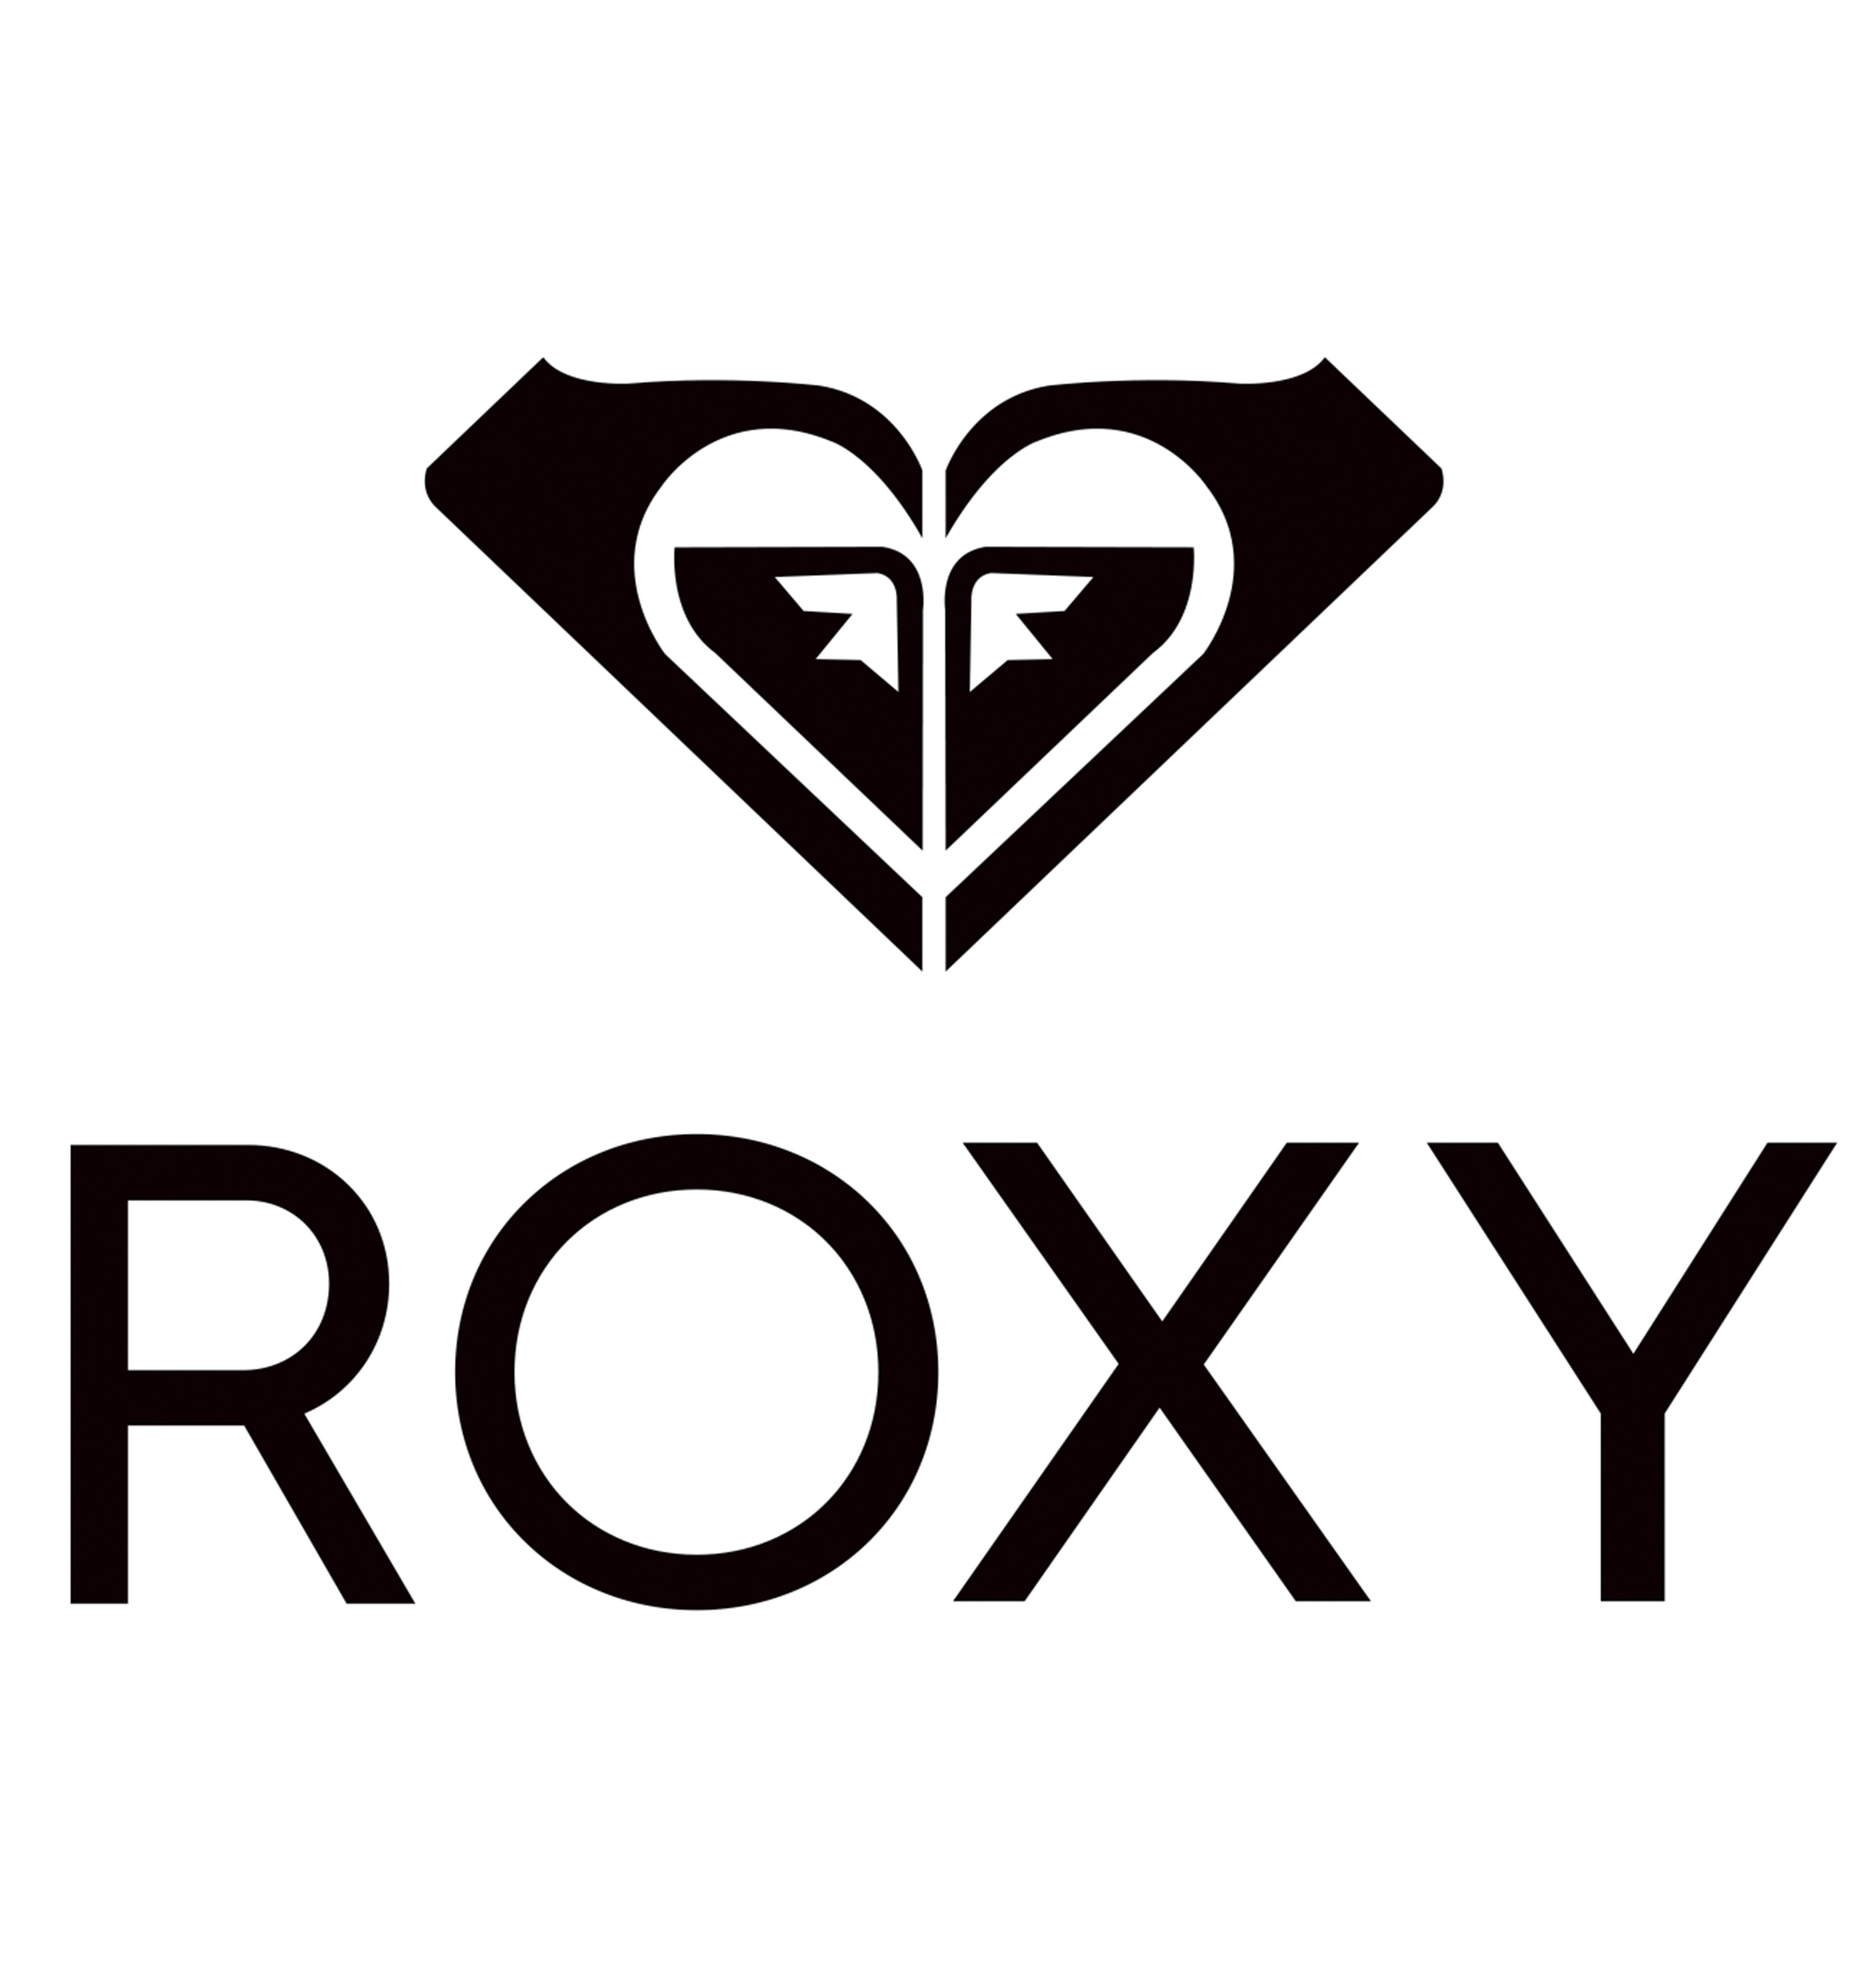 ＜Roxy＞ROXY-A アクティブなROXYファンの目印になるブランドロゴステッカー画像